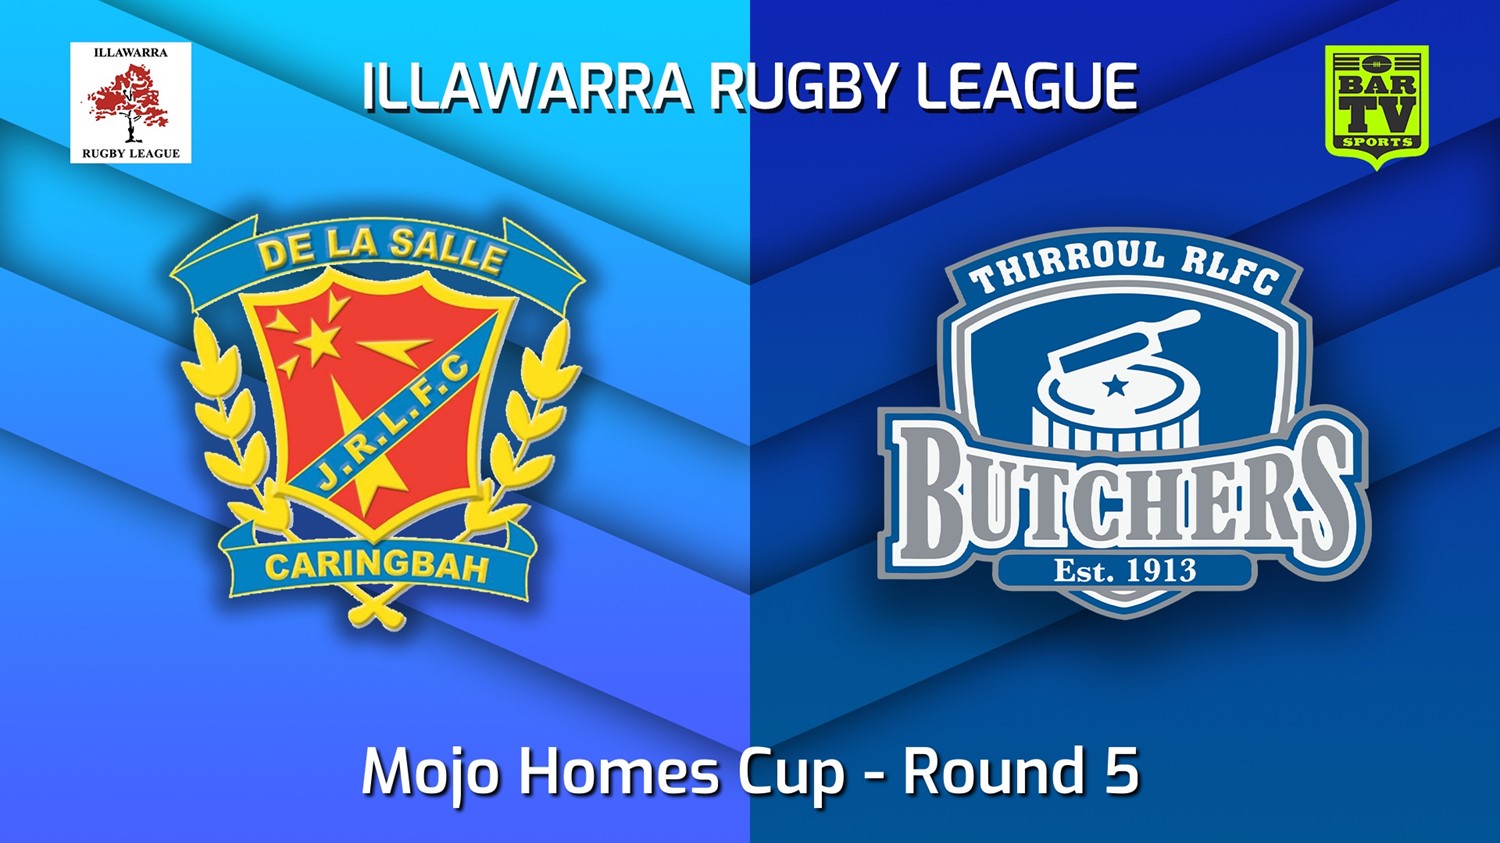 220528-Illawarra Round 5 - Mojo Homes Cup - De La Salle v Thirroul Butchers Slate Image